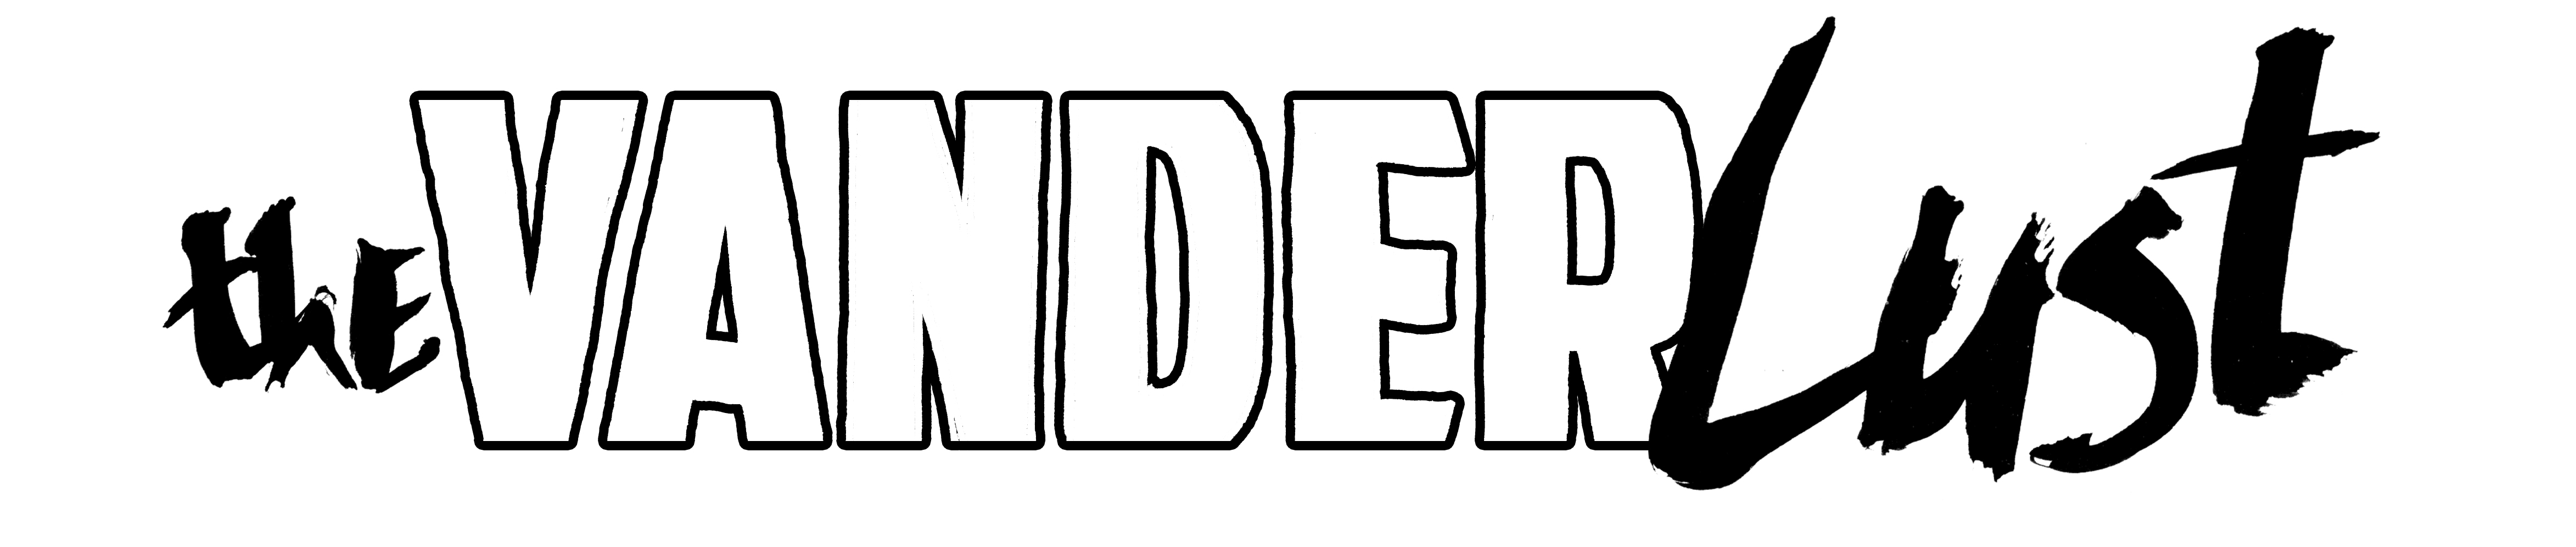 The Vanderlust logo